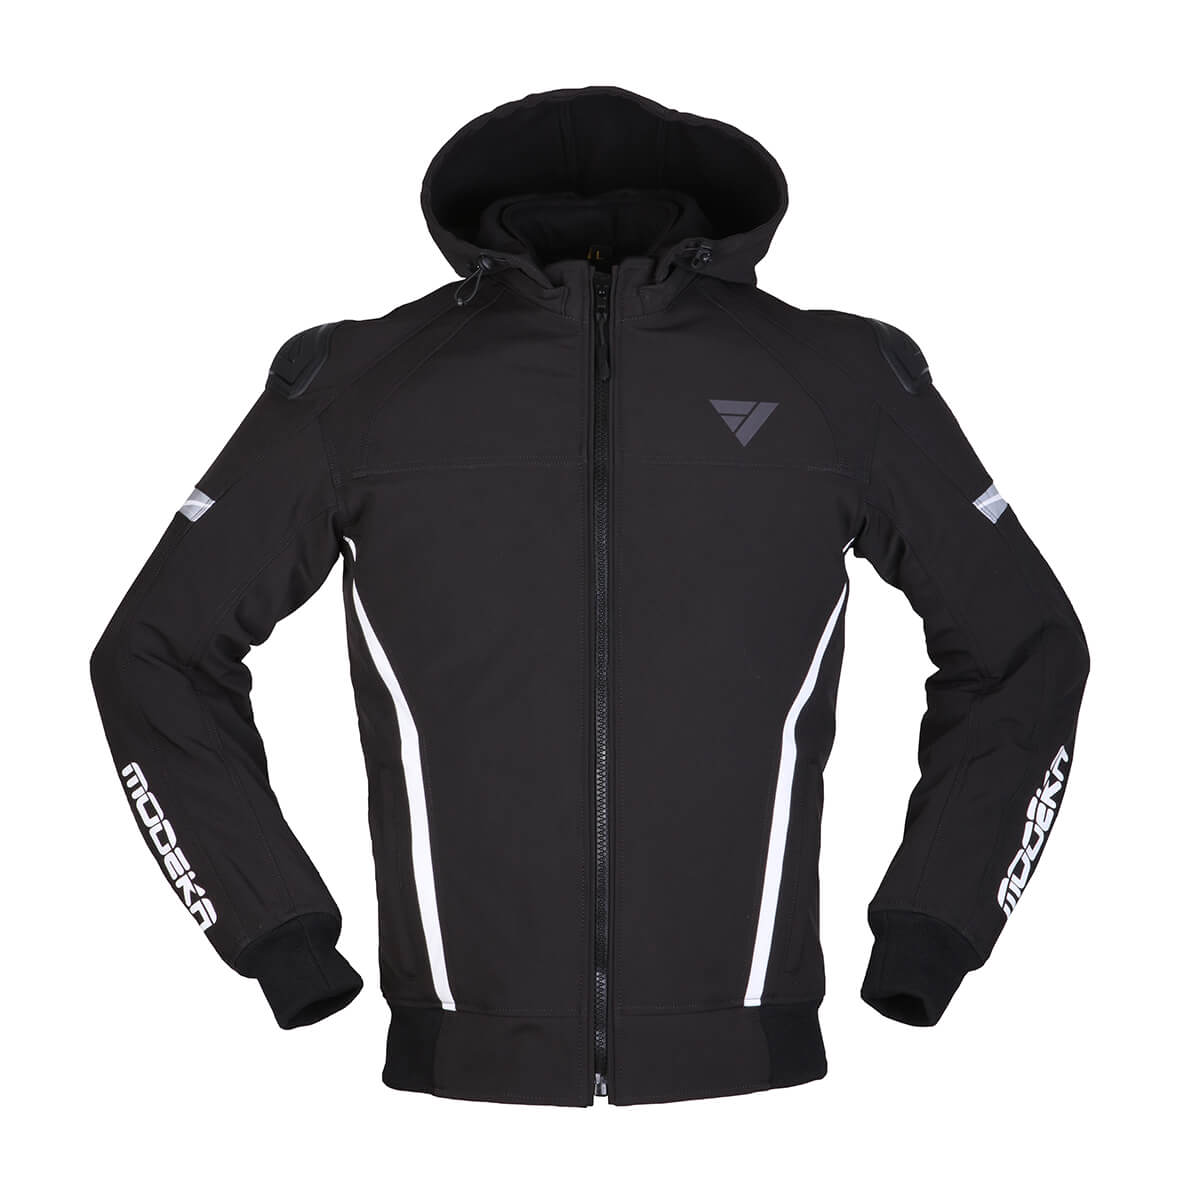 Image of Modeka Clarke Sport Jacket Black White Size L ID 4045765189498